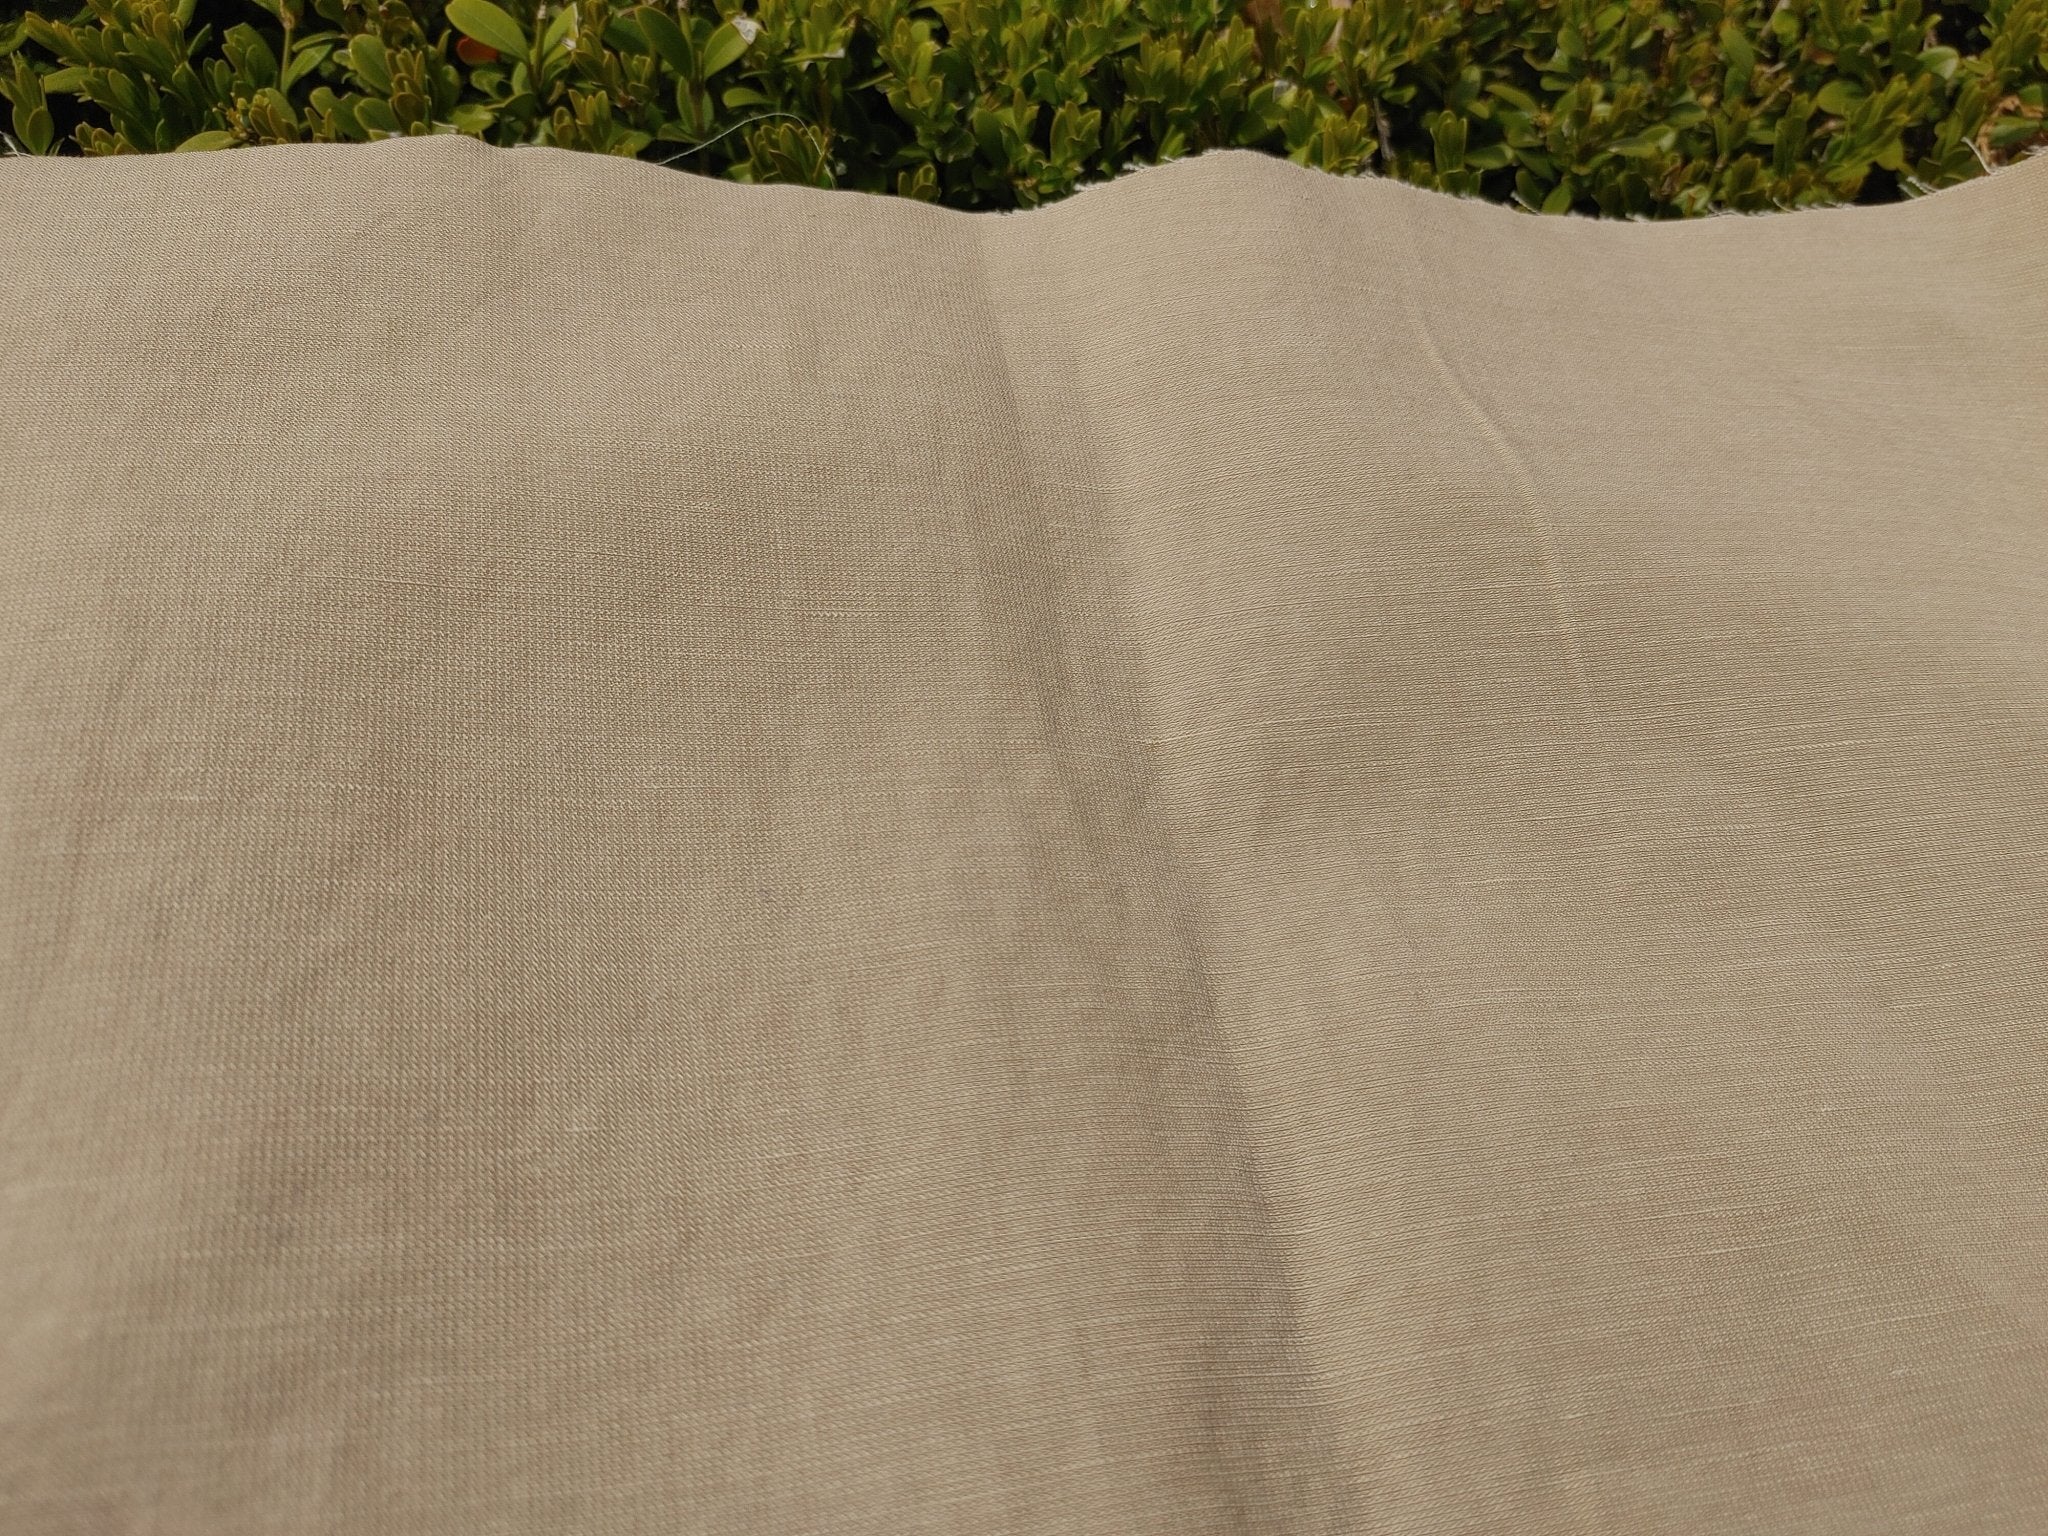 Soft Beige Linen Blend: Dobby Weave with Warp Span Stretch Fabric 7787 - The Linen Lab - Beige